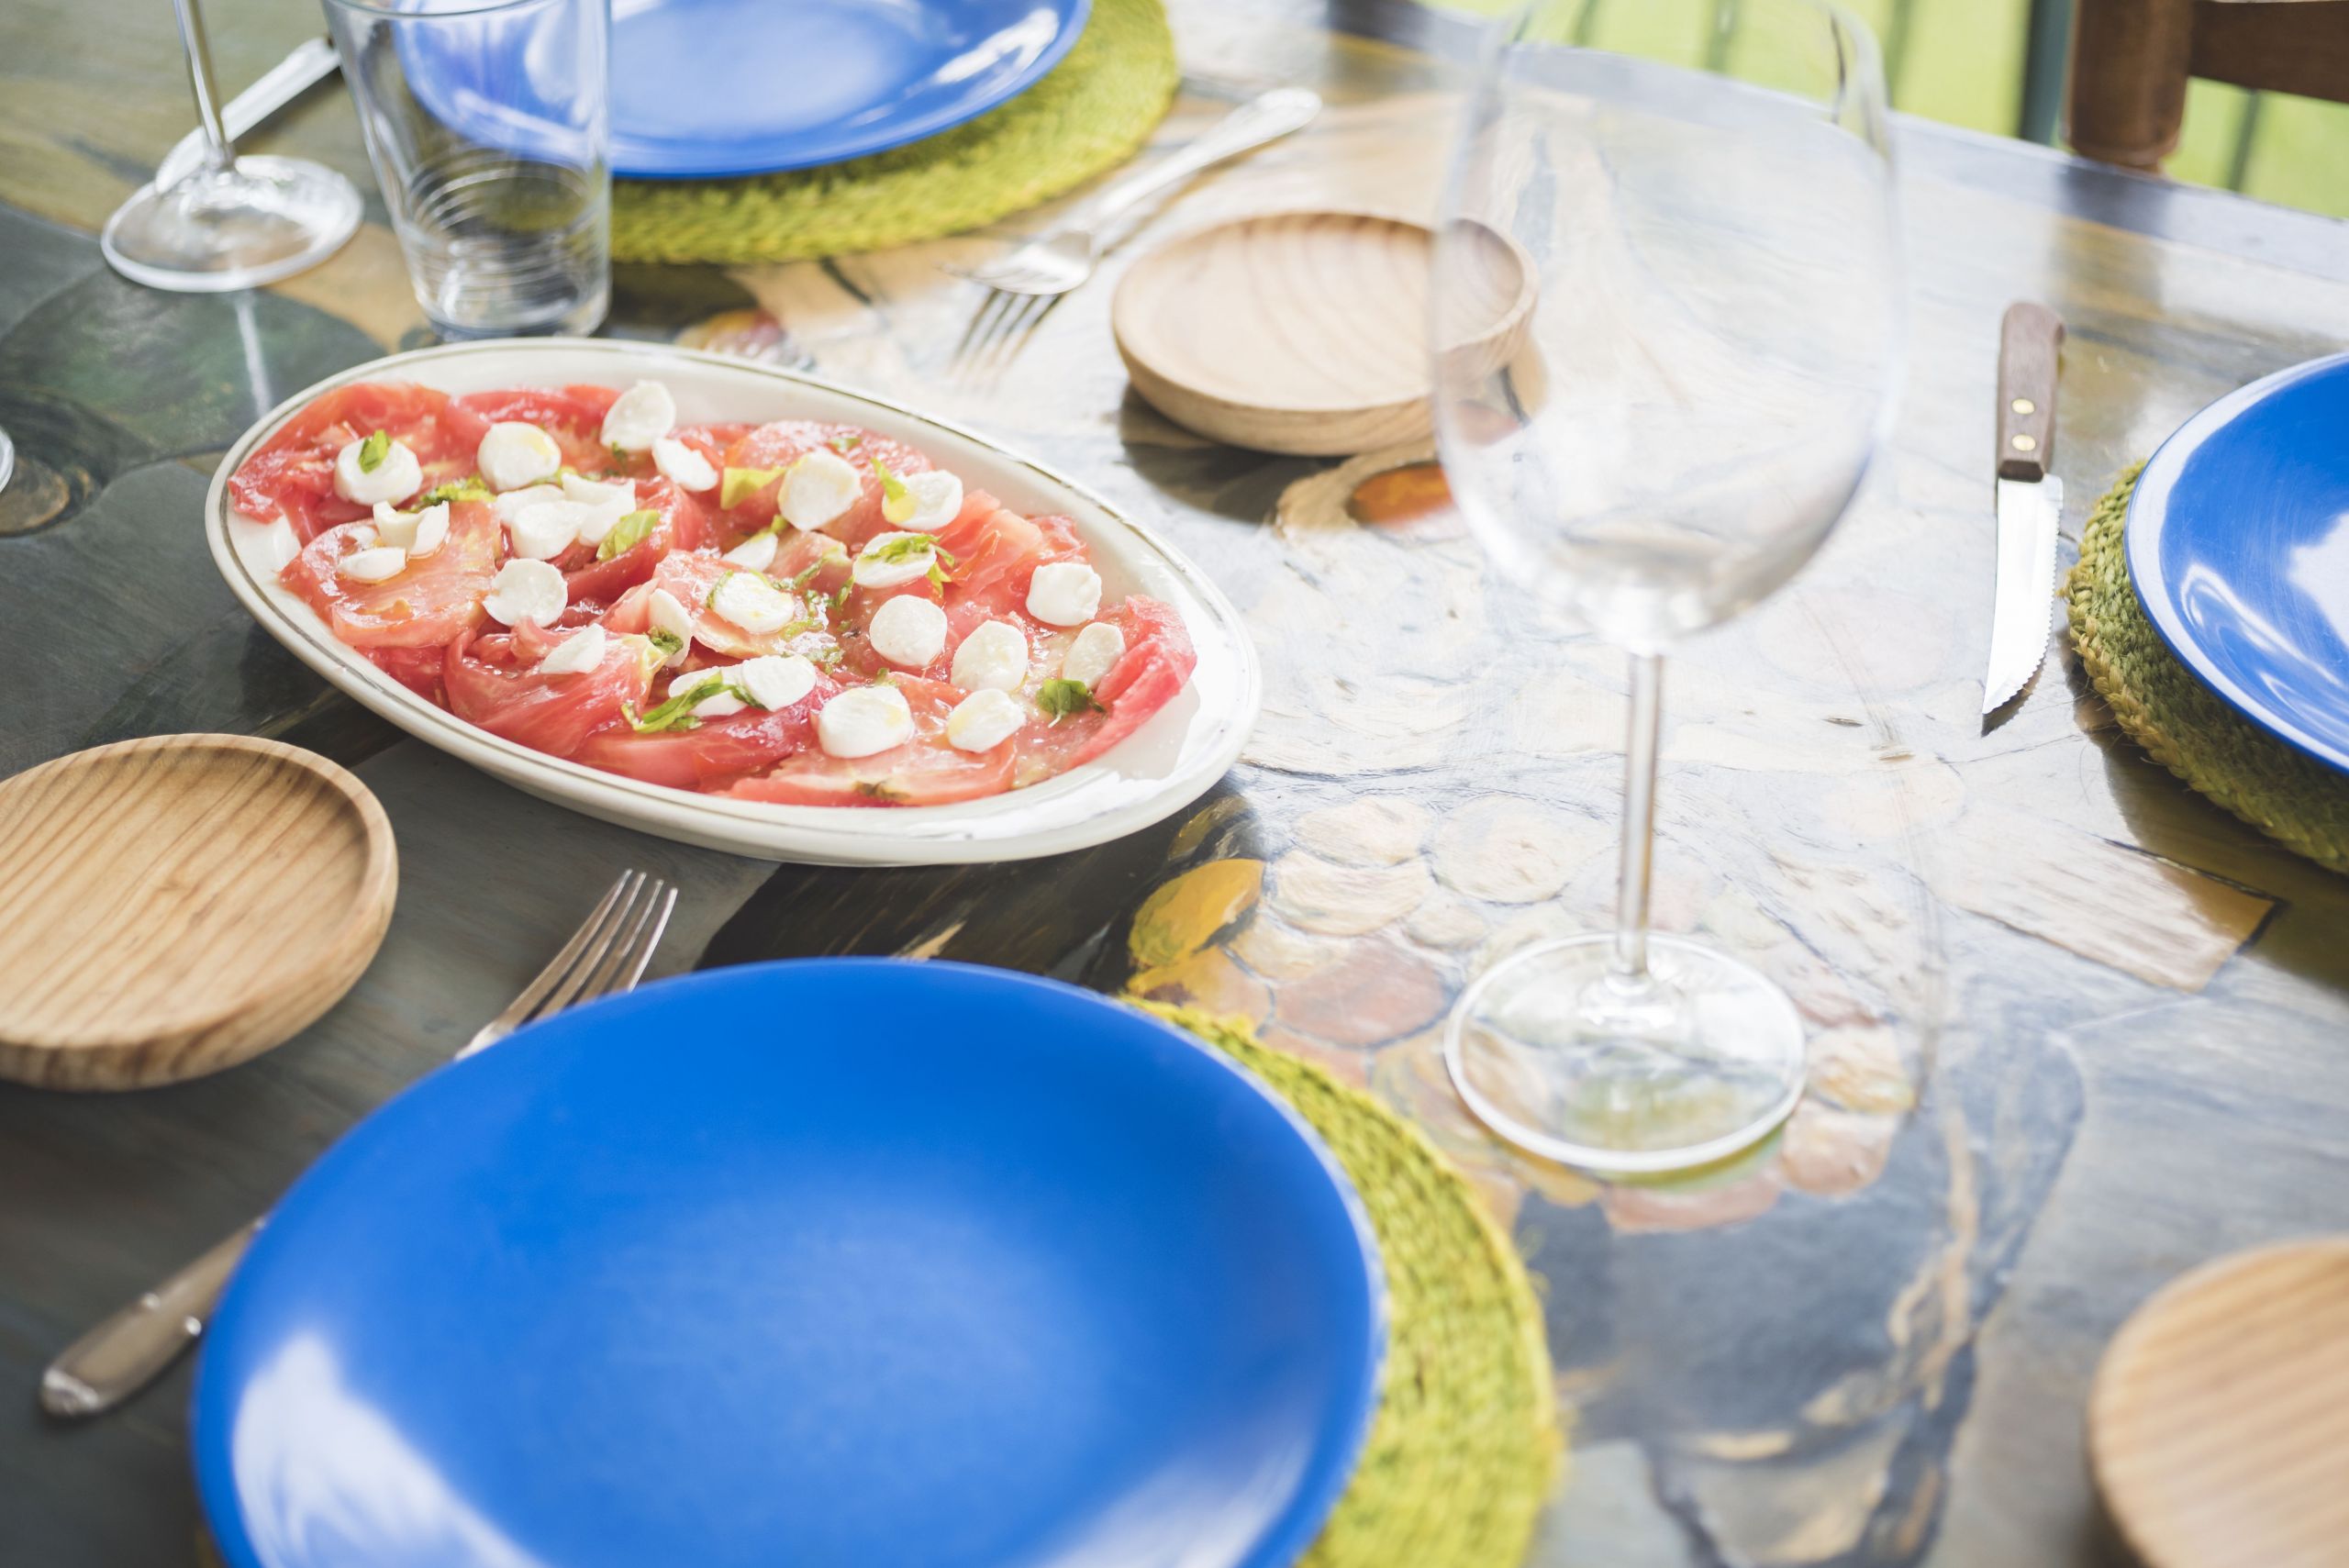 Greek Dinner Party Menu Ideas
 How to Host a Modern Greek Dinner Party